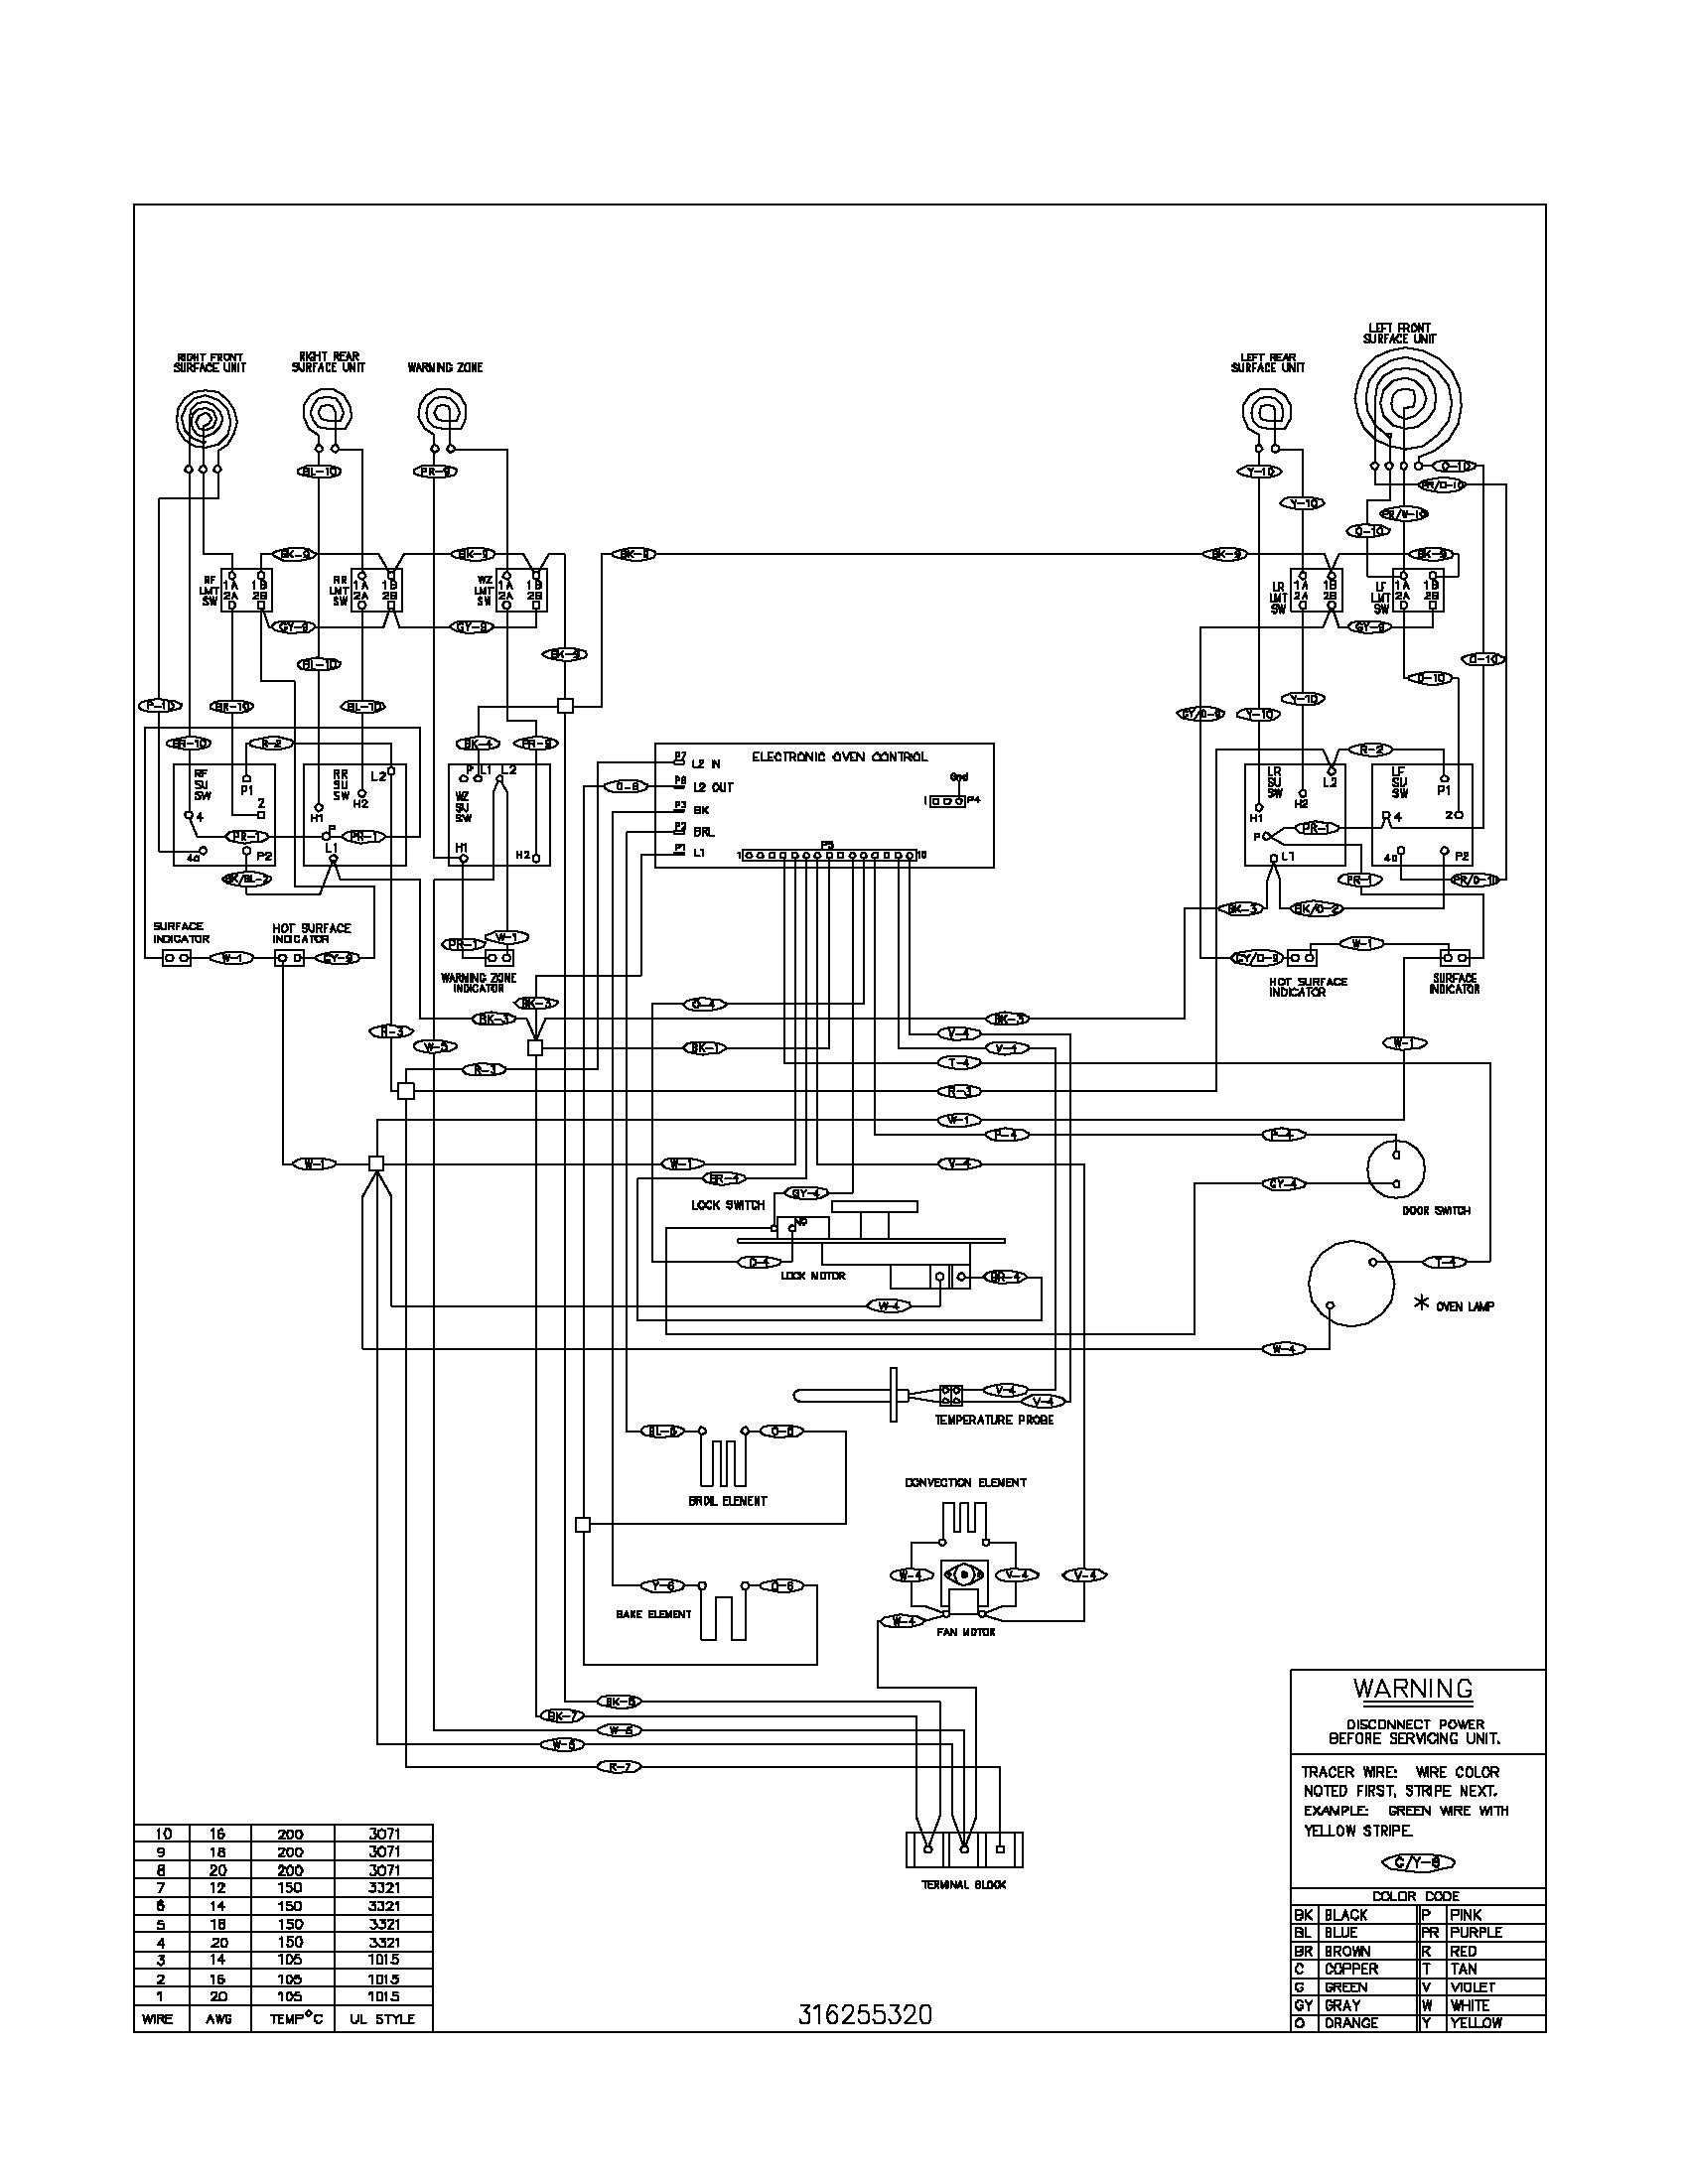 wiring diagram for whirlpool dryer best whirlpool fefl88acc electric rh ipphil